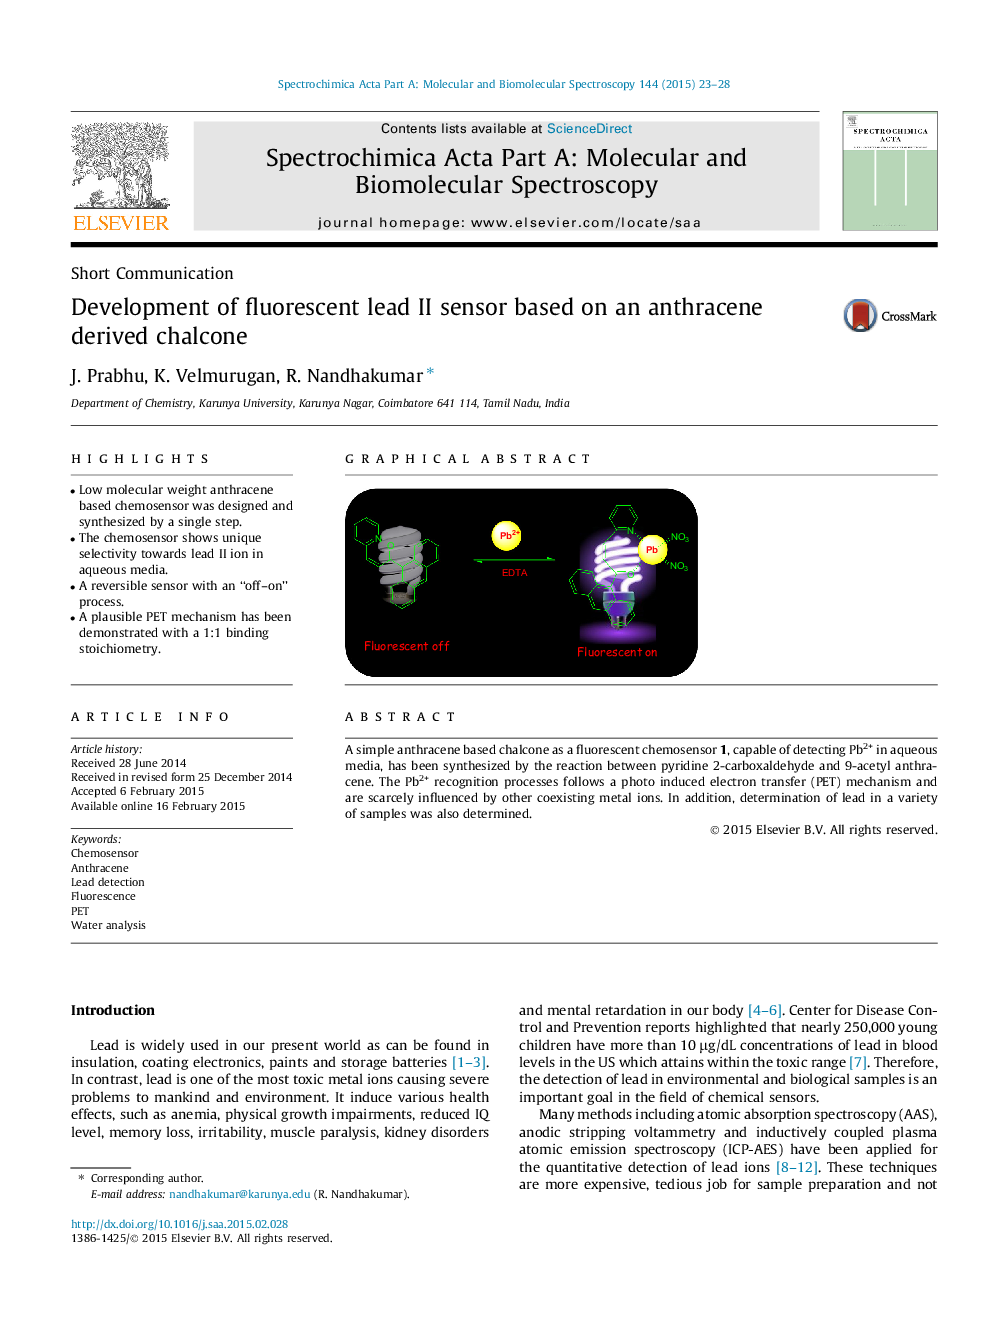 Development of fluorescent lead II sensor based on an anthracene derived chalcone